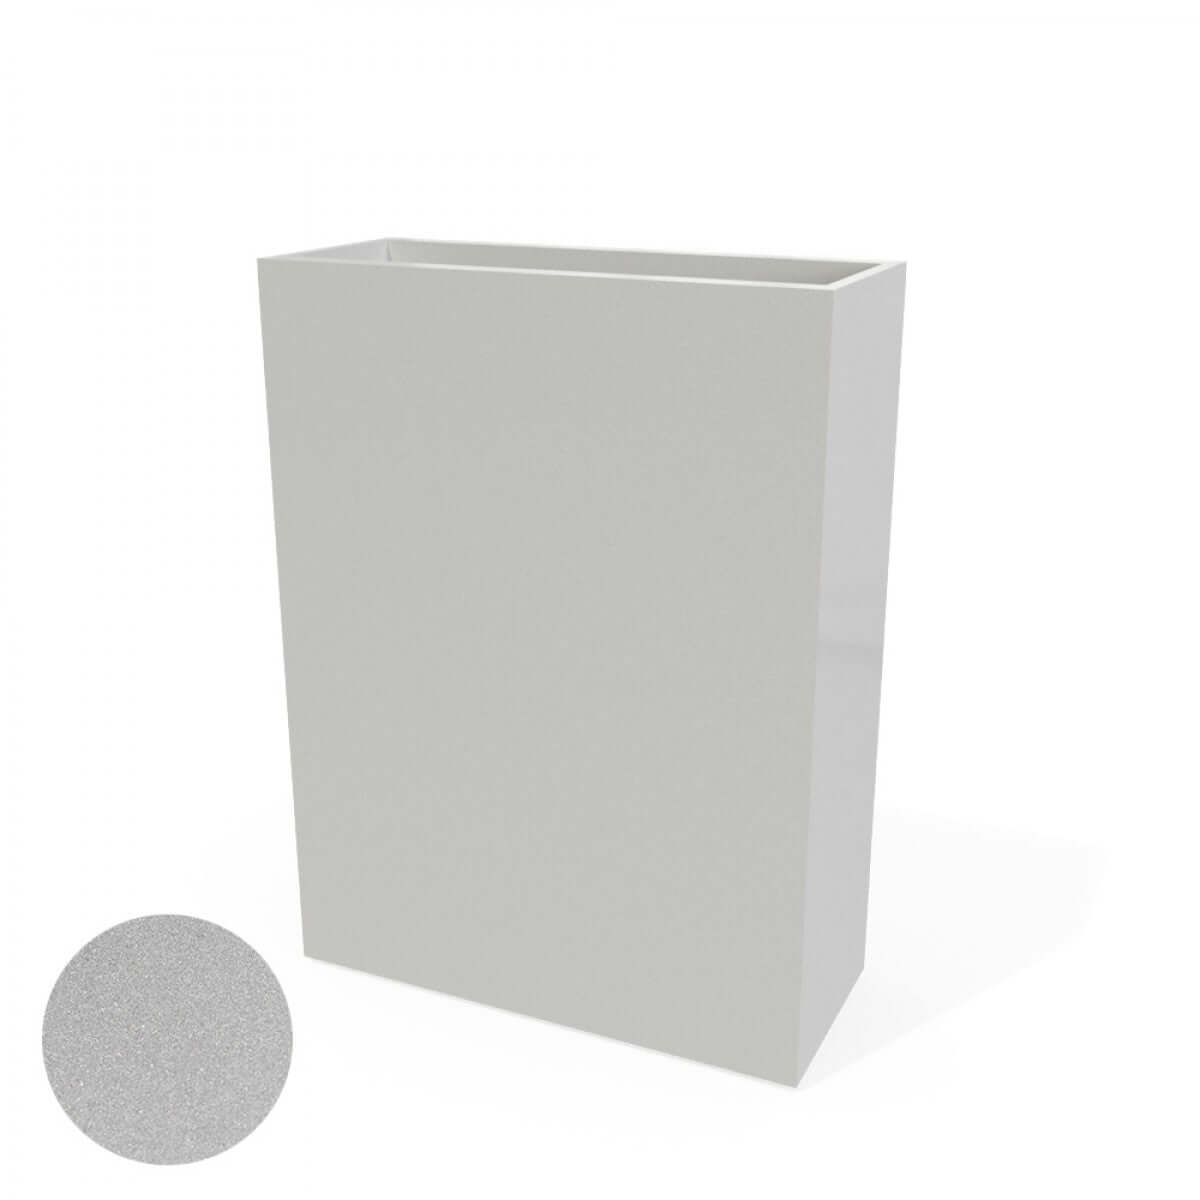 AMESBURY NARROW RECTANGULAR FIBERGLASS PLANTER BOX - 24"L x 10"W x 32"H